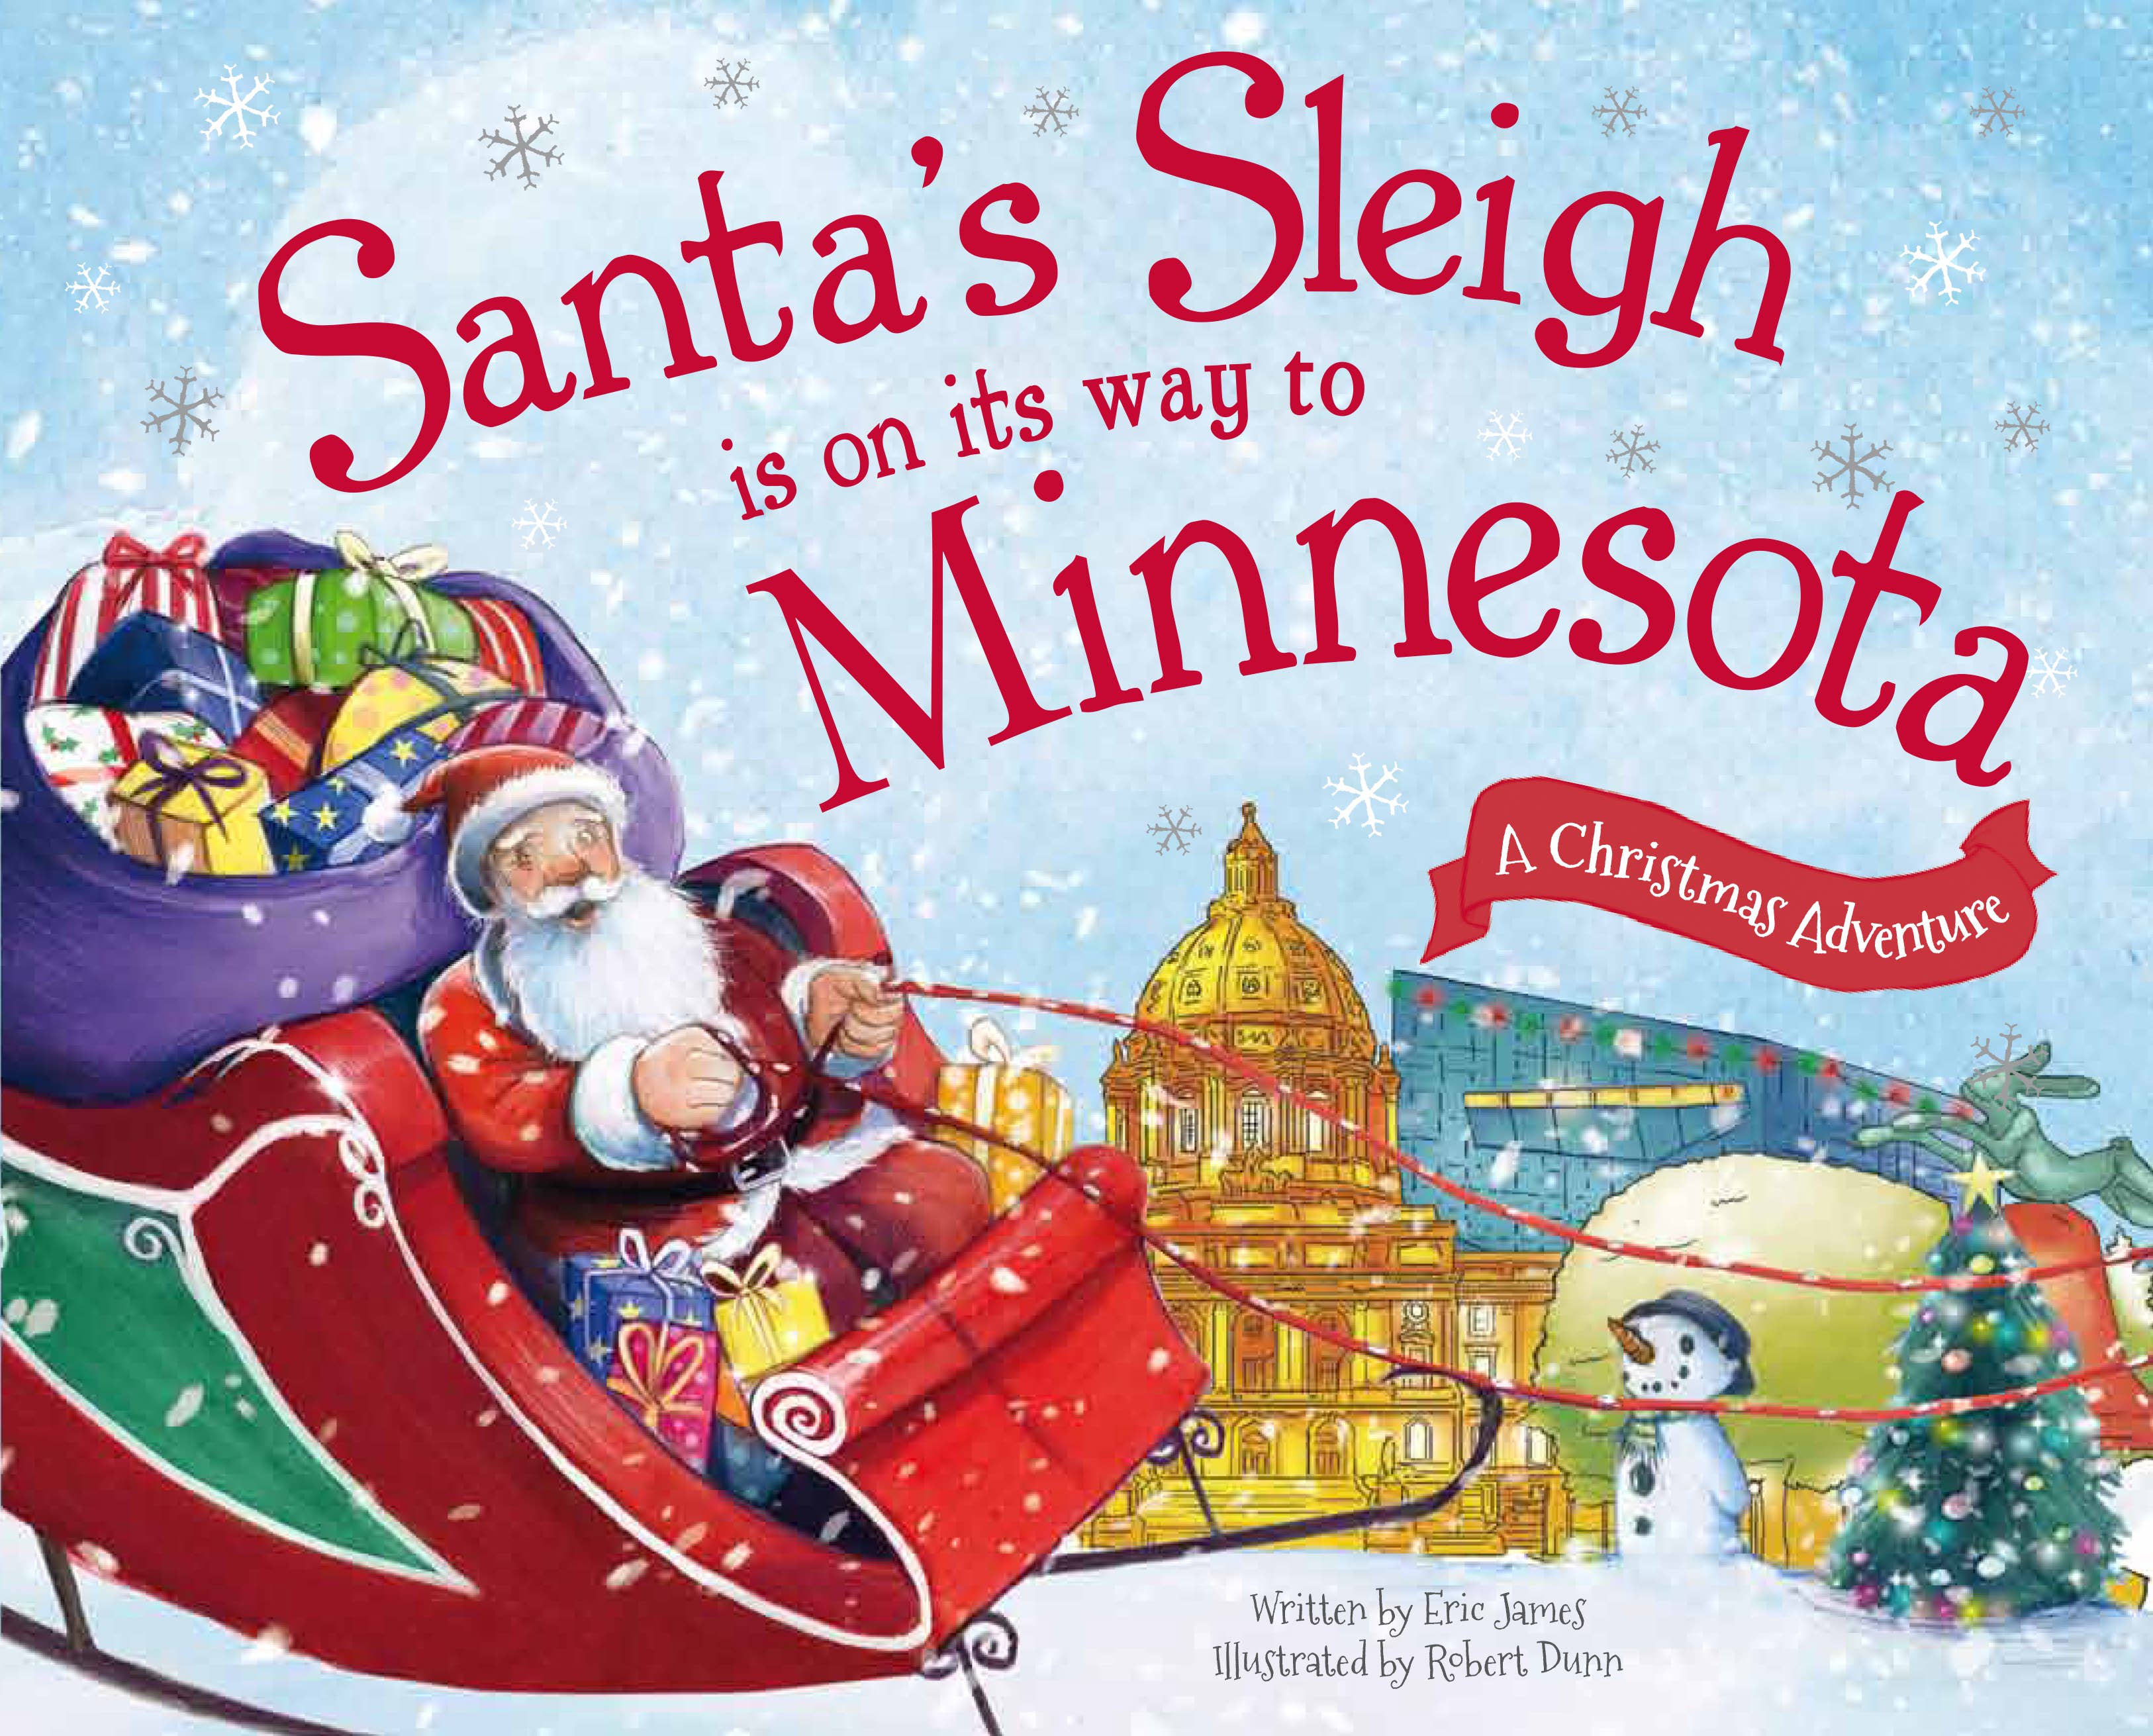 Book: Santa's Sleigh Is on Its Way to Minnesota